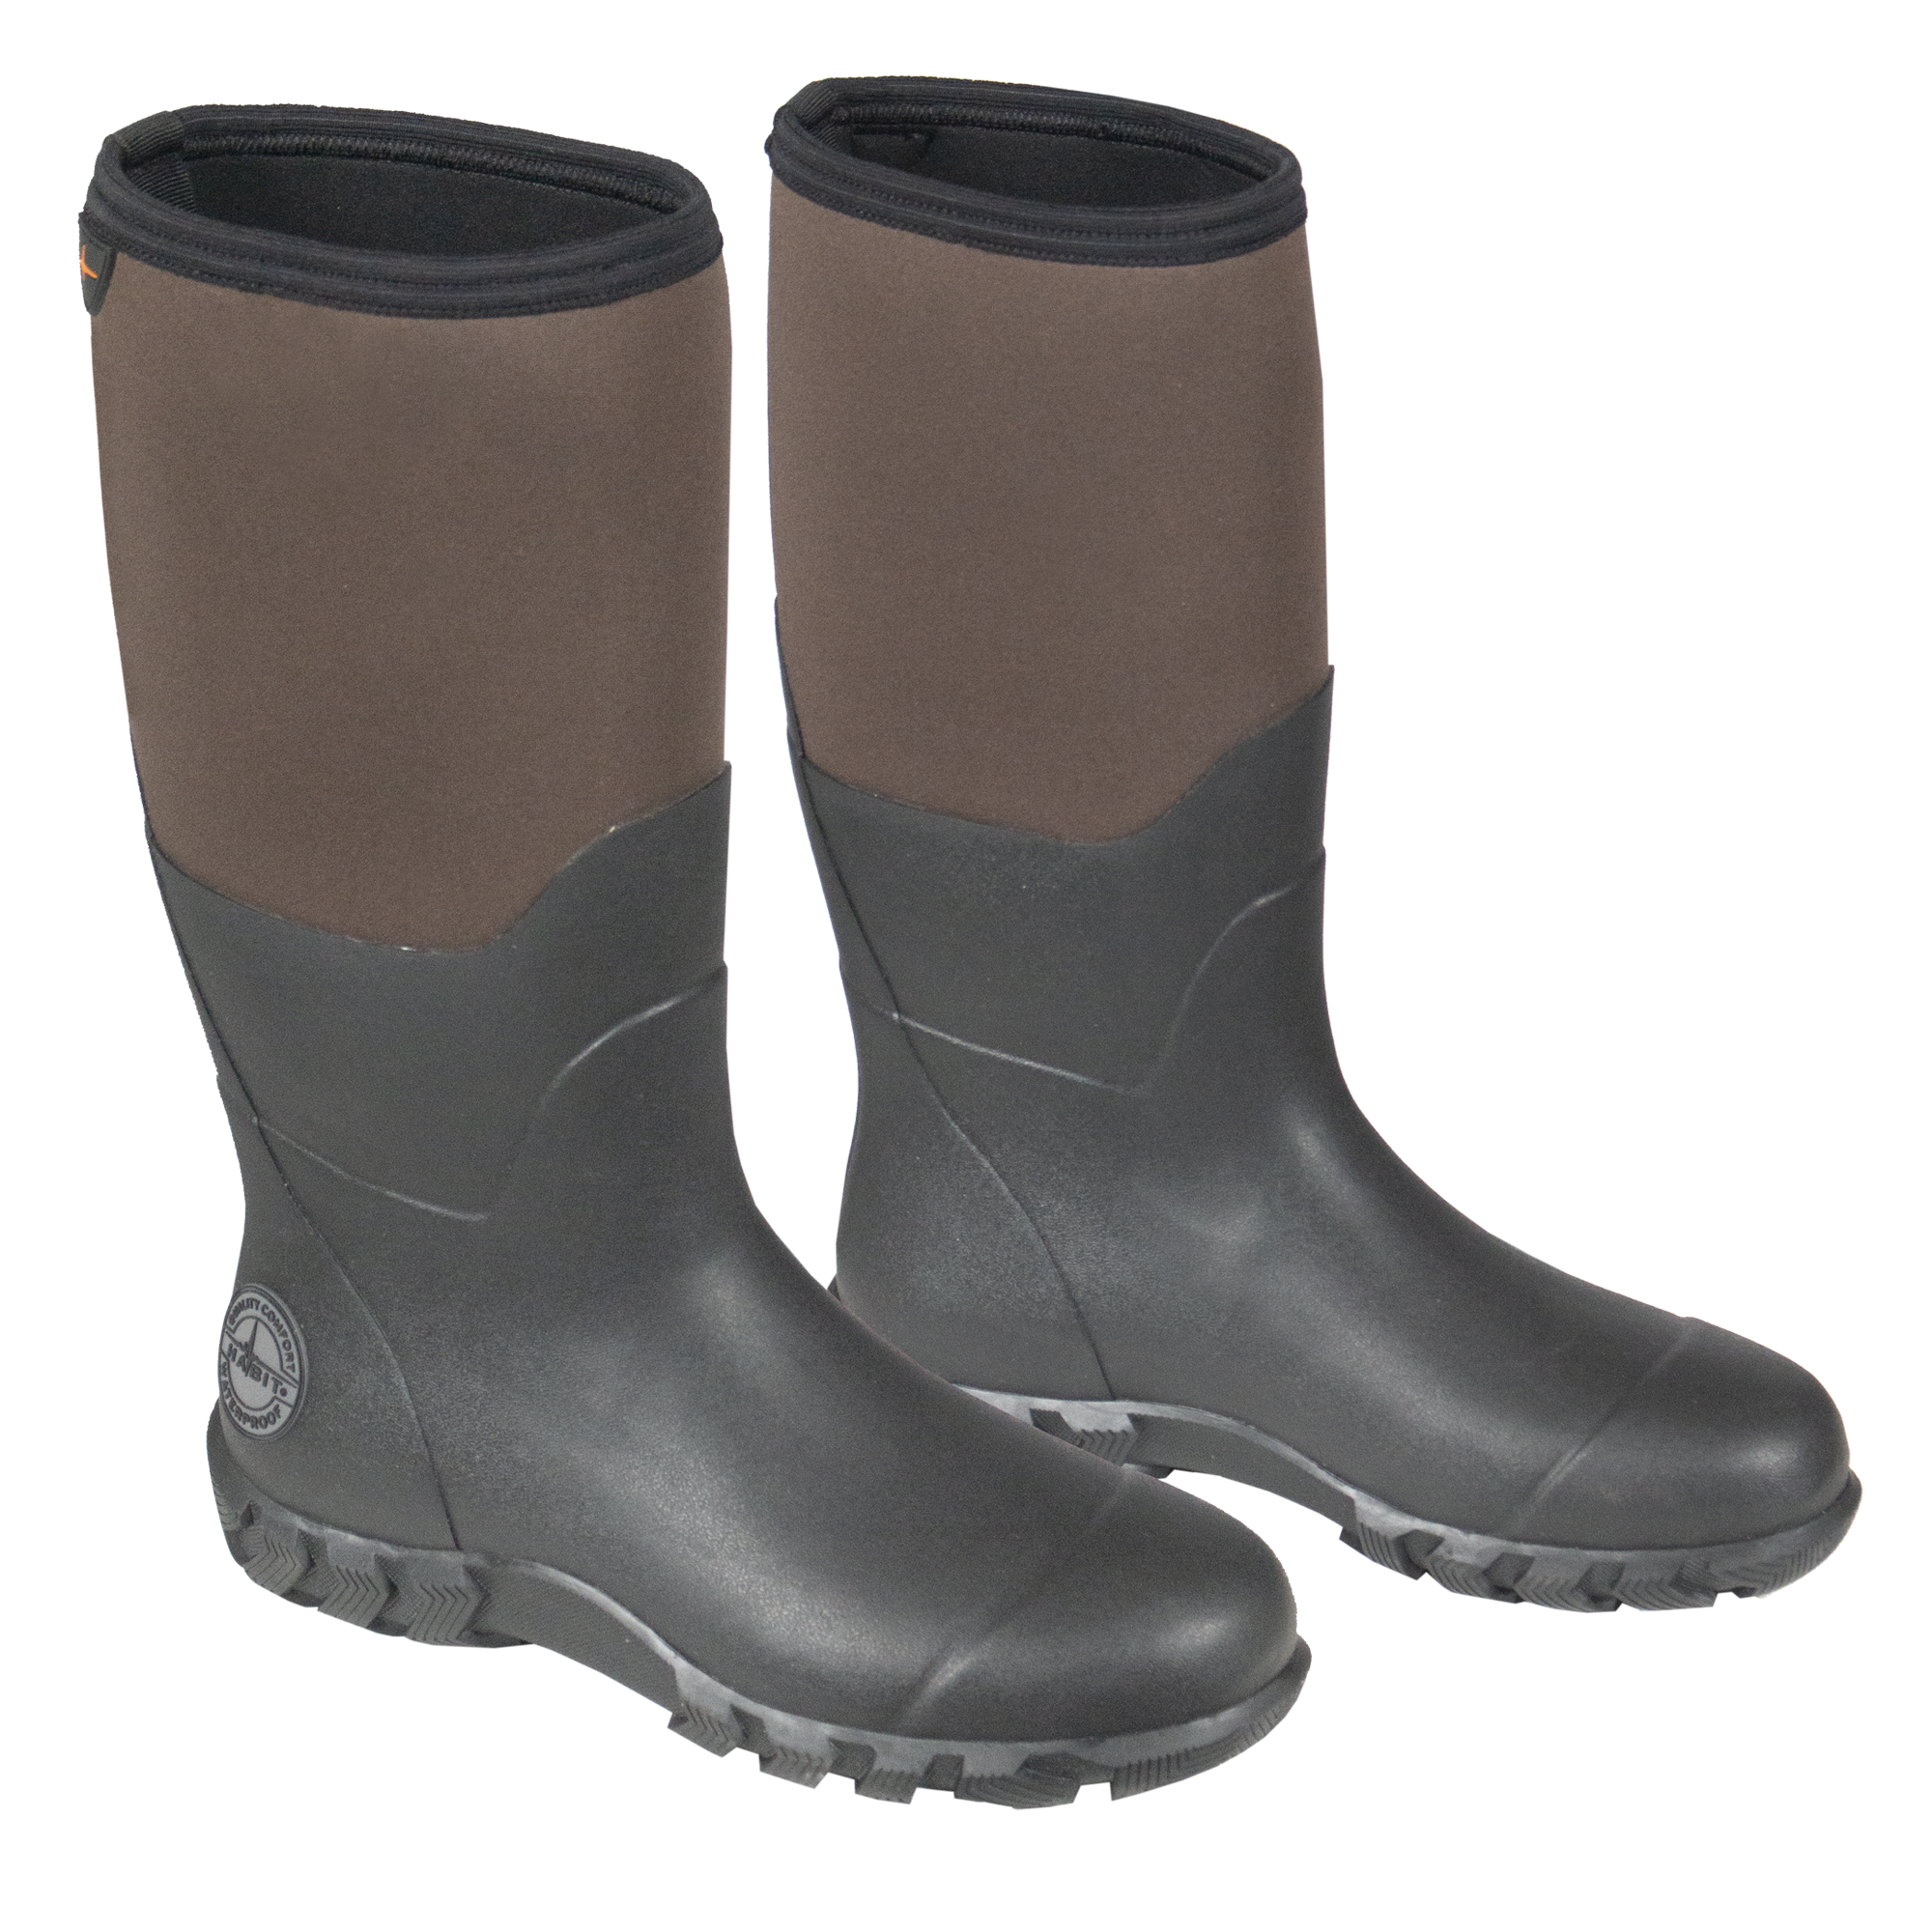 Men’s 15" Waterproof All-Weather Rubber Boots Turkish Coffee